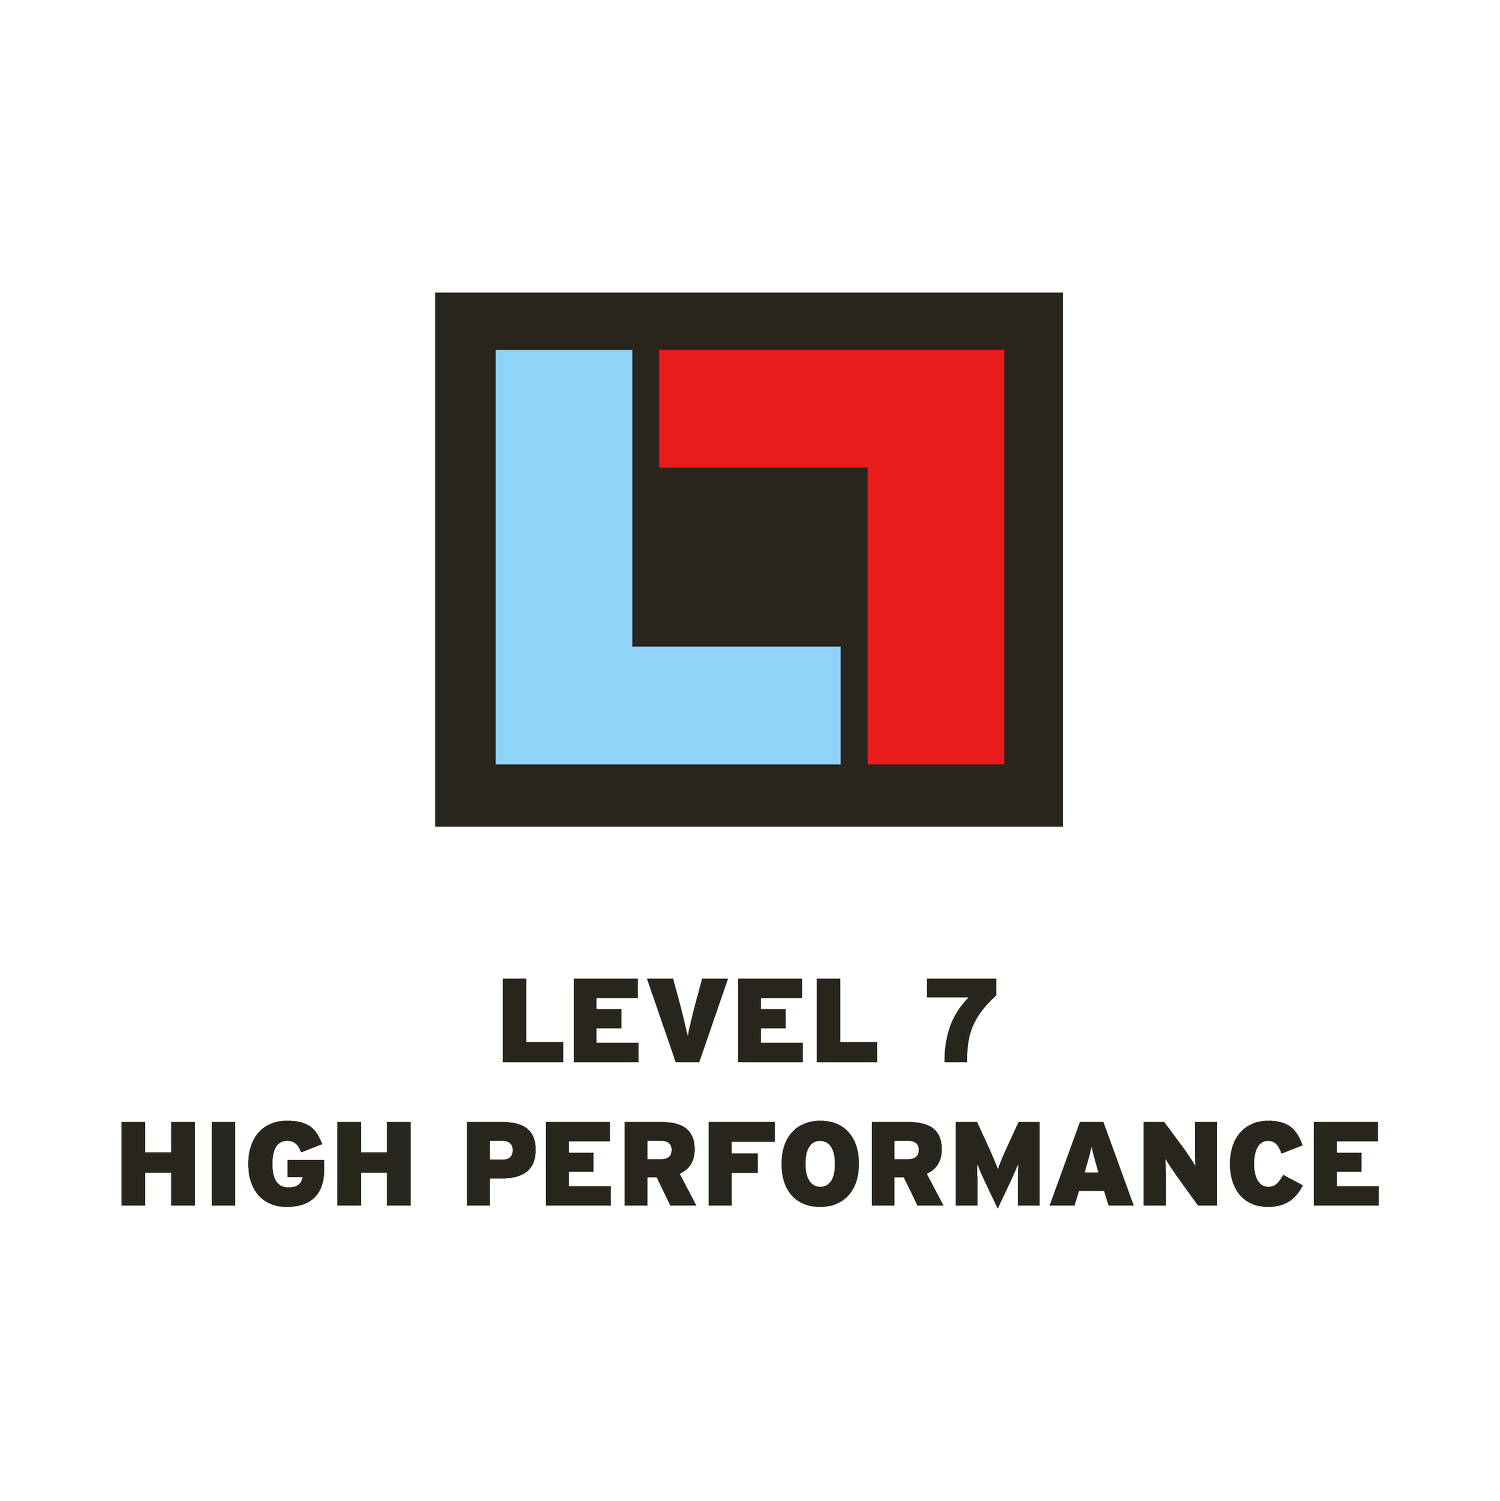 LEVEL 7 HIGH PERFORMANCE COACHING